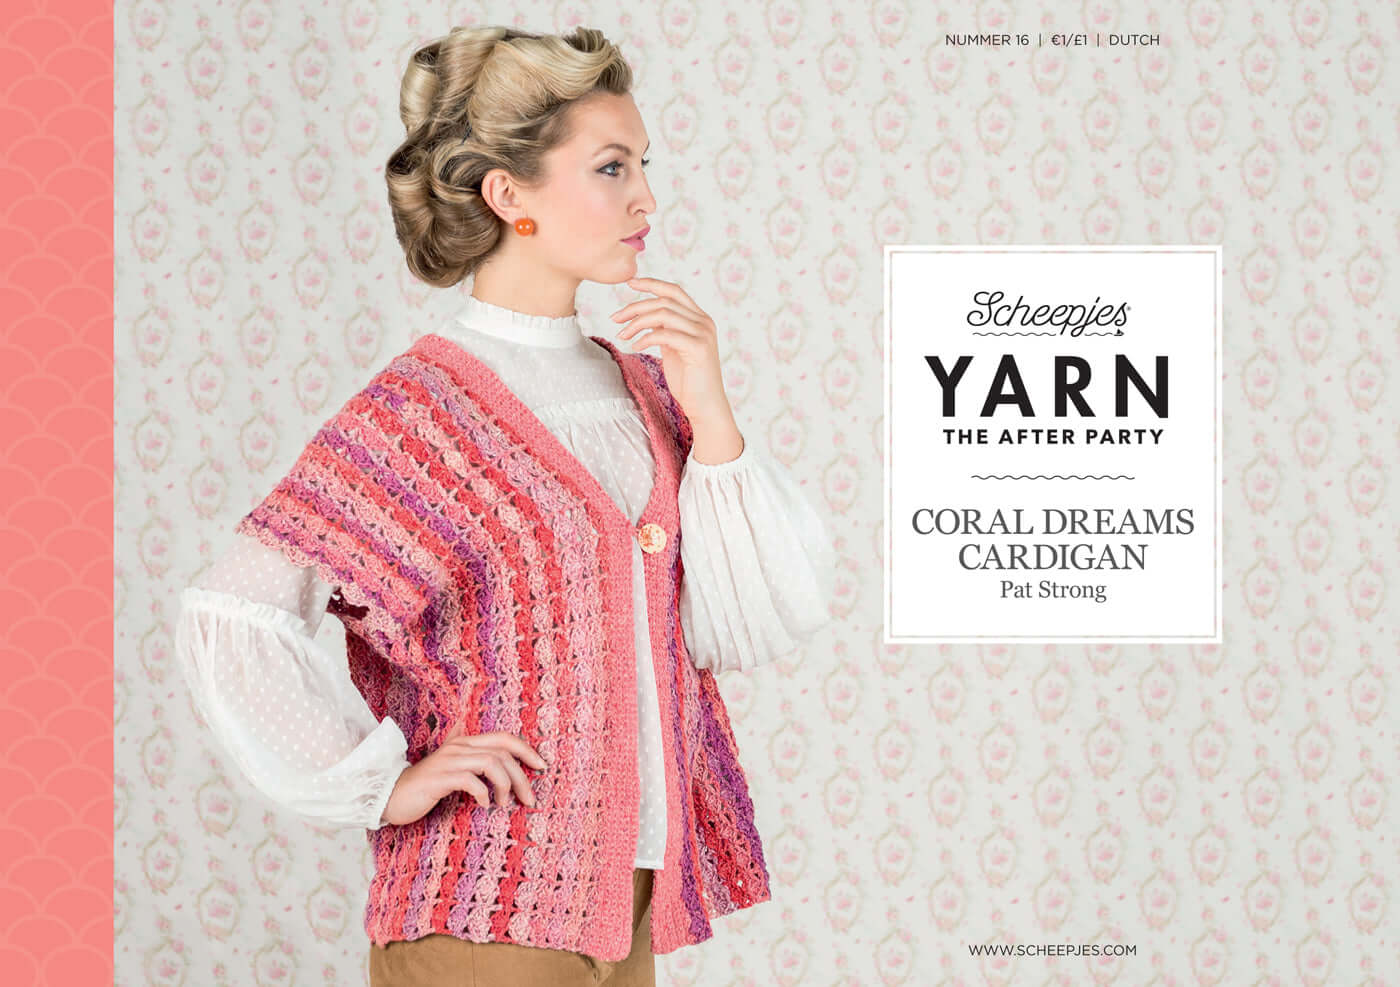 Scheepjes Yarn The After Party no. 16 - Coral Dreams Cardigan (booklet) - (Crochet)